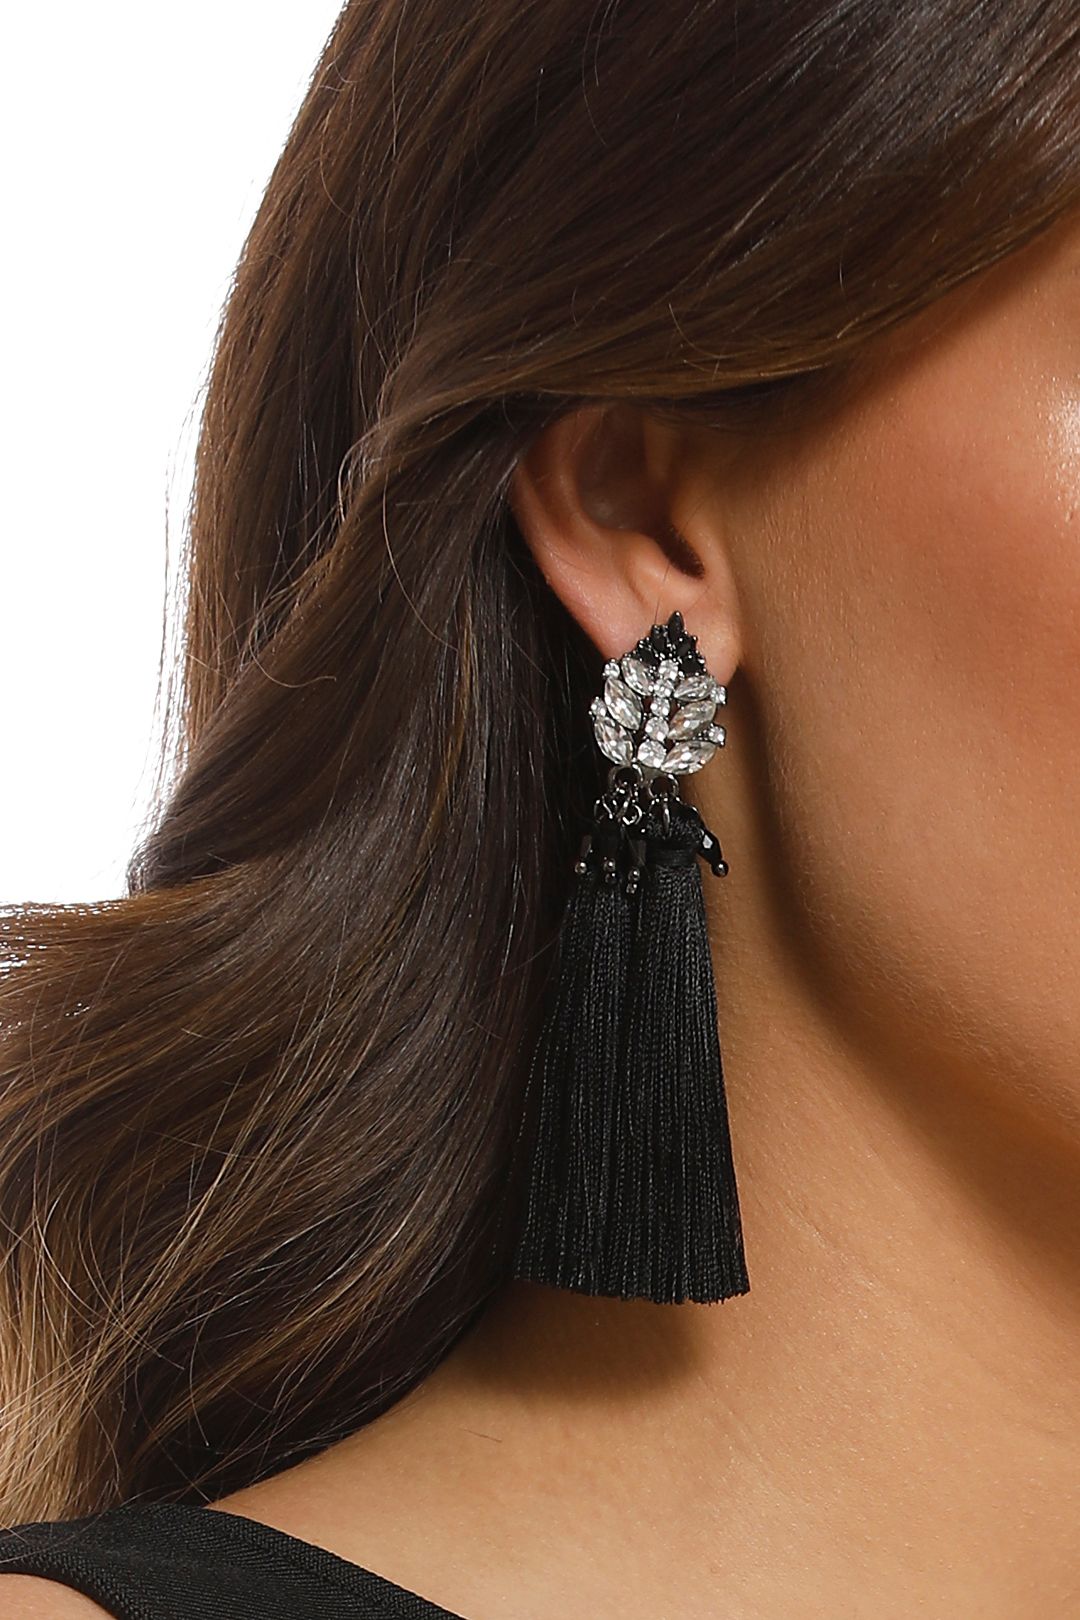 Adorne - Jewelled Top Tassel Earrings - Black - Product